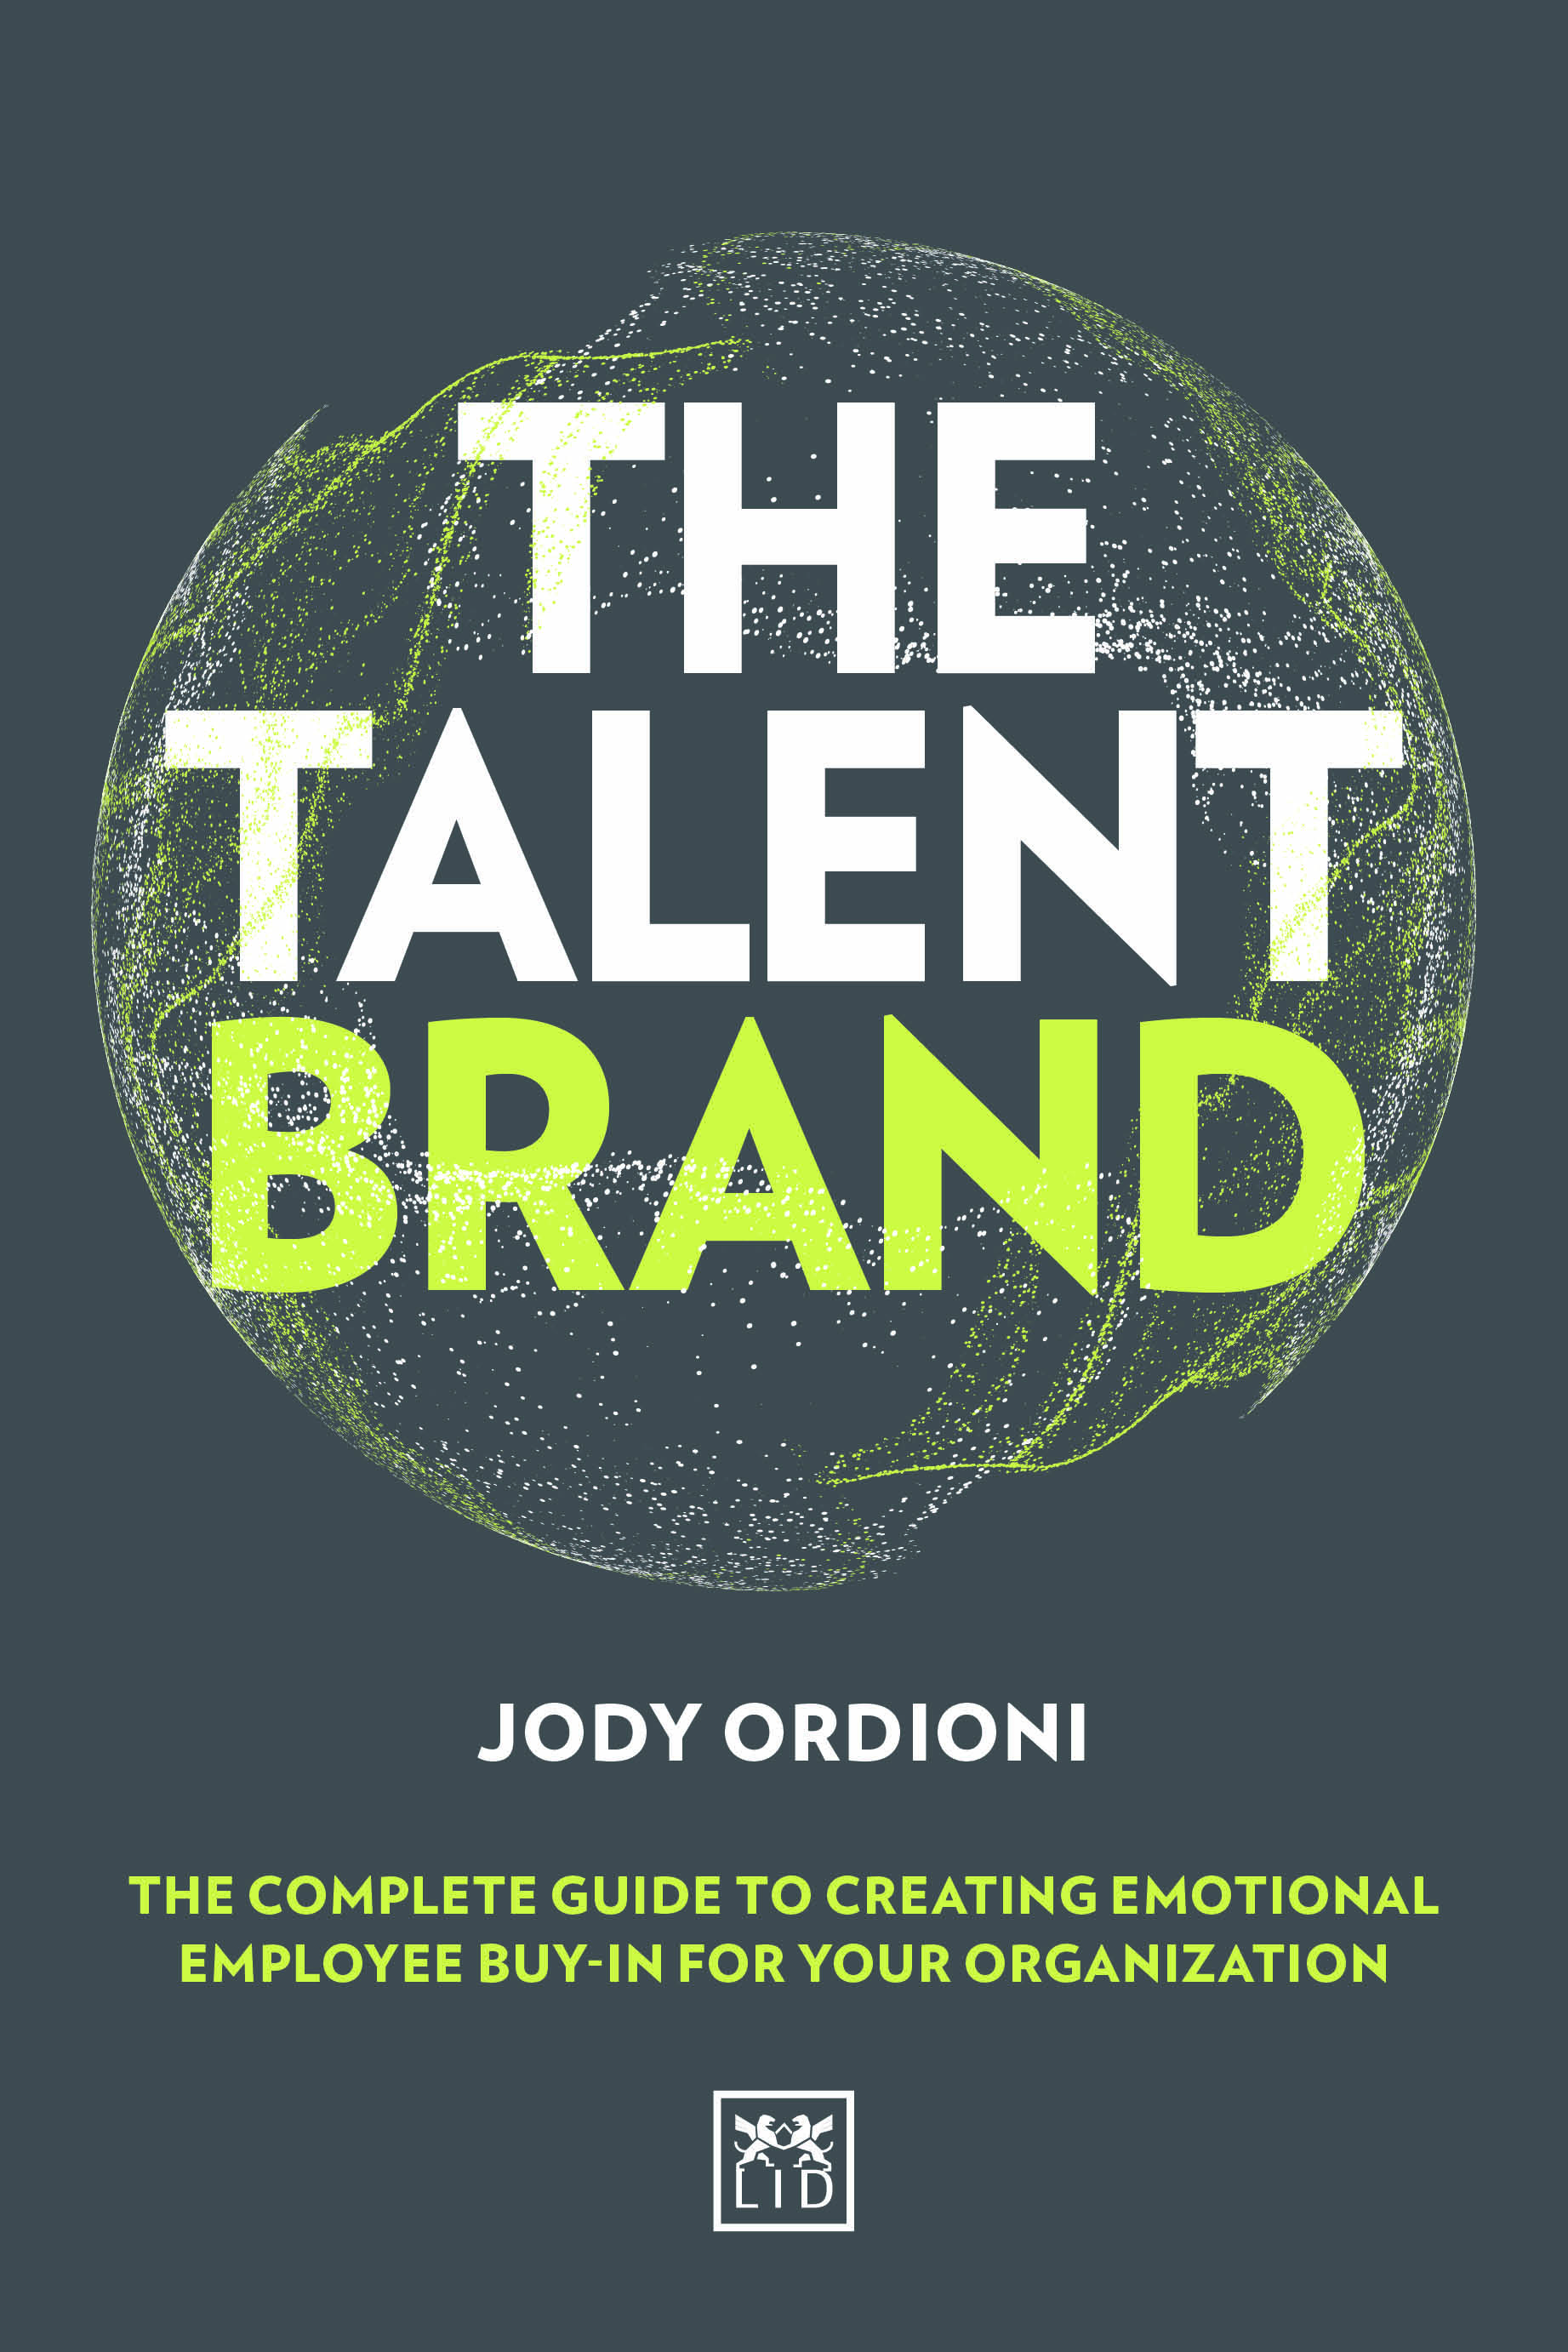 The Talent Brand by Jody Ordioni